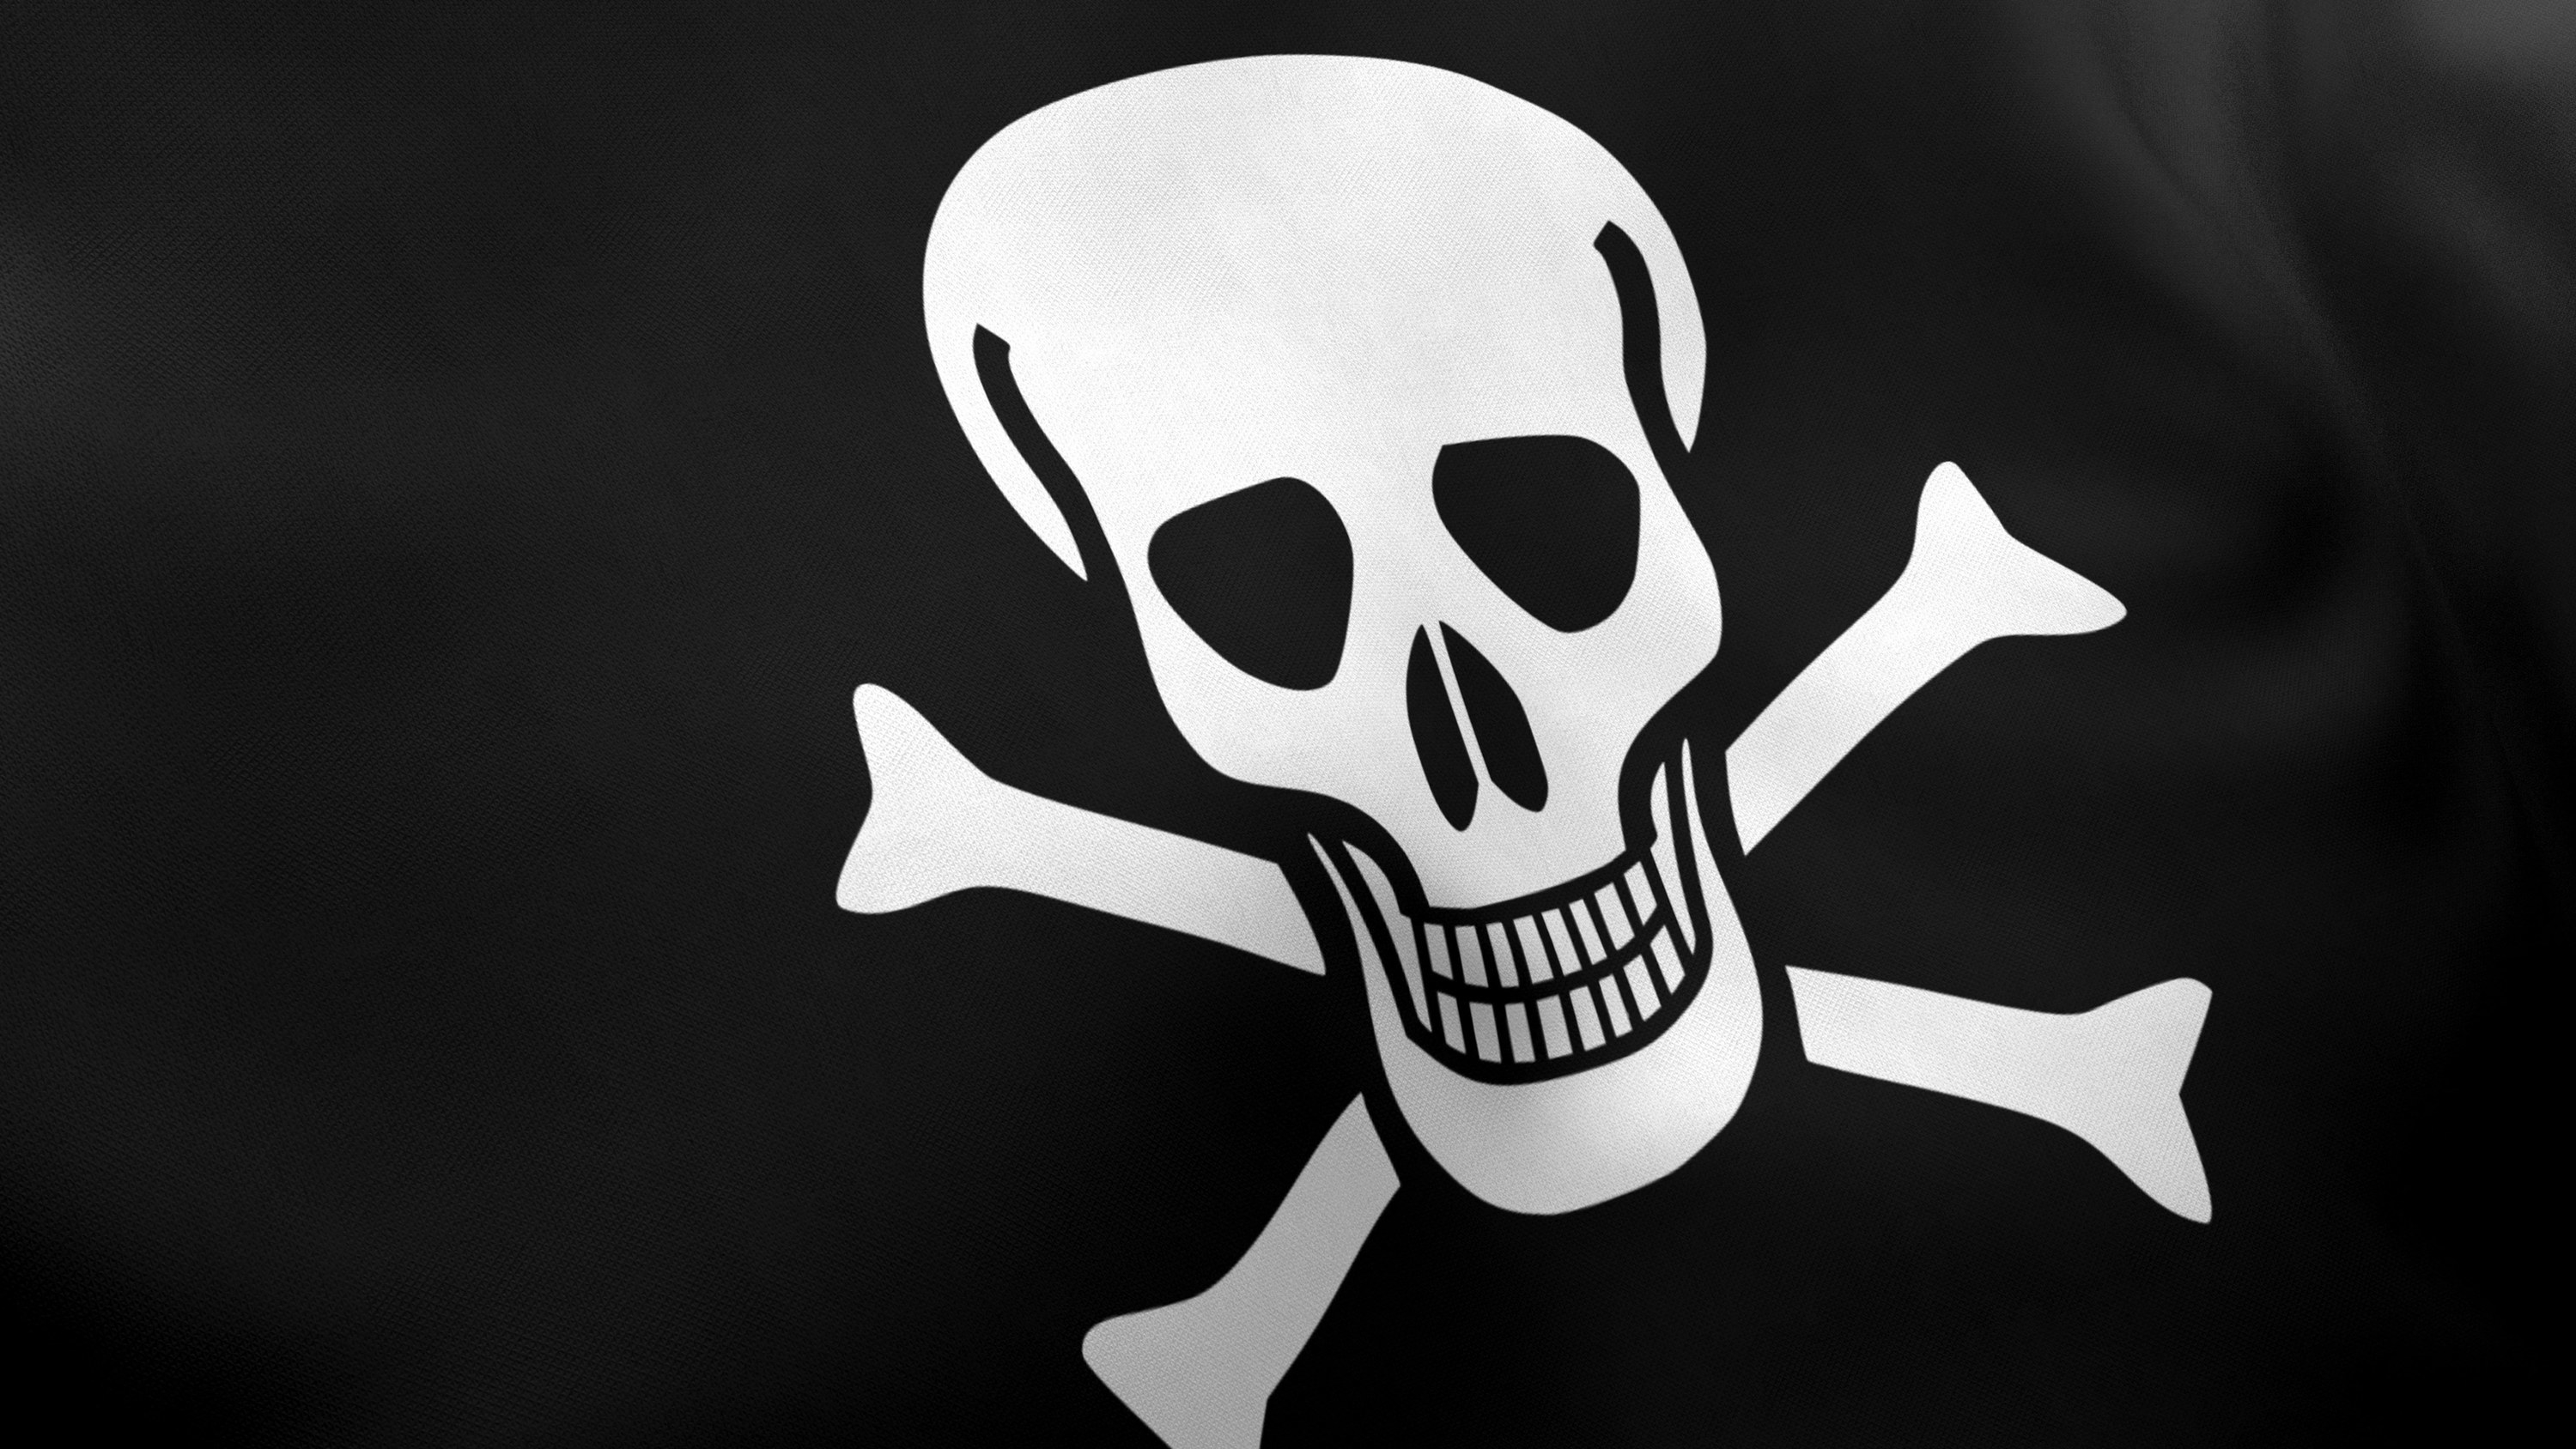 Skull and crossbones pirate symbol